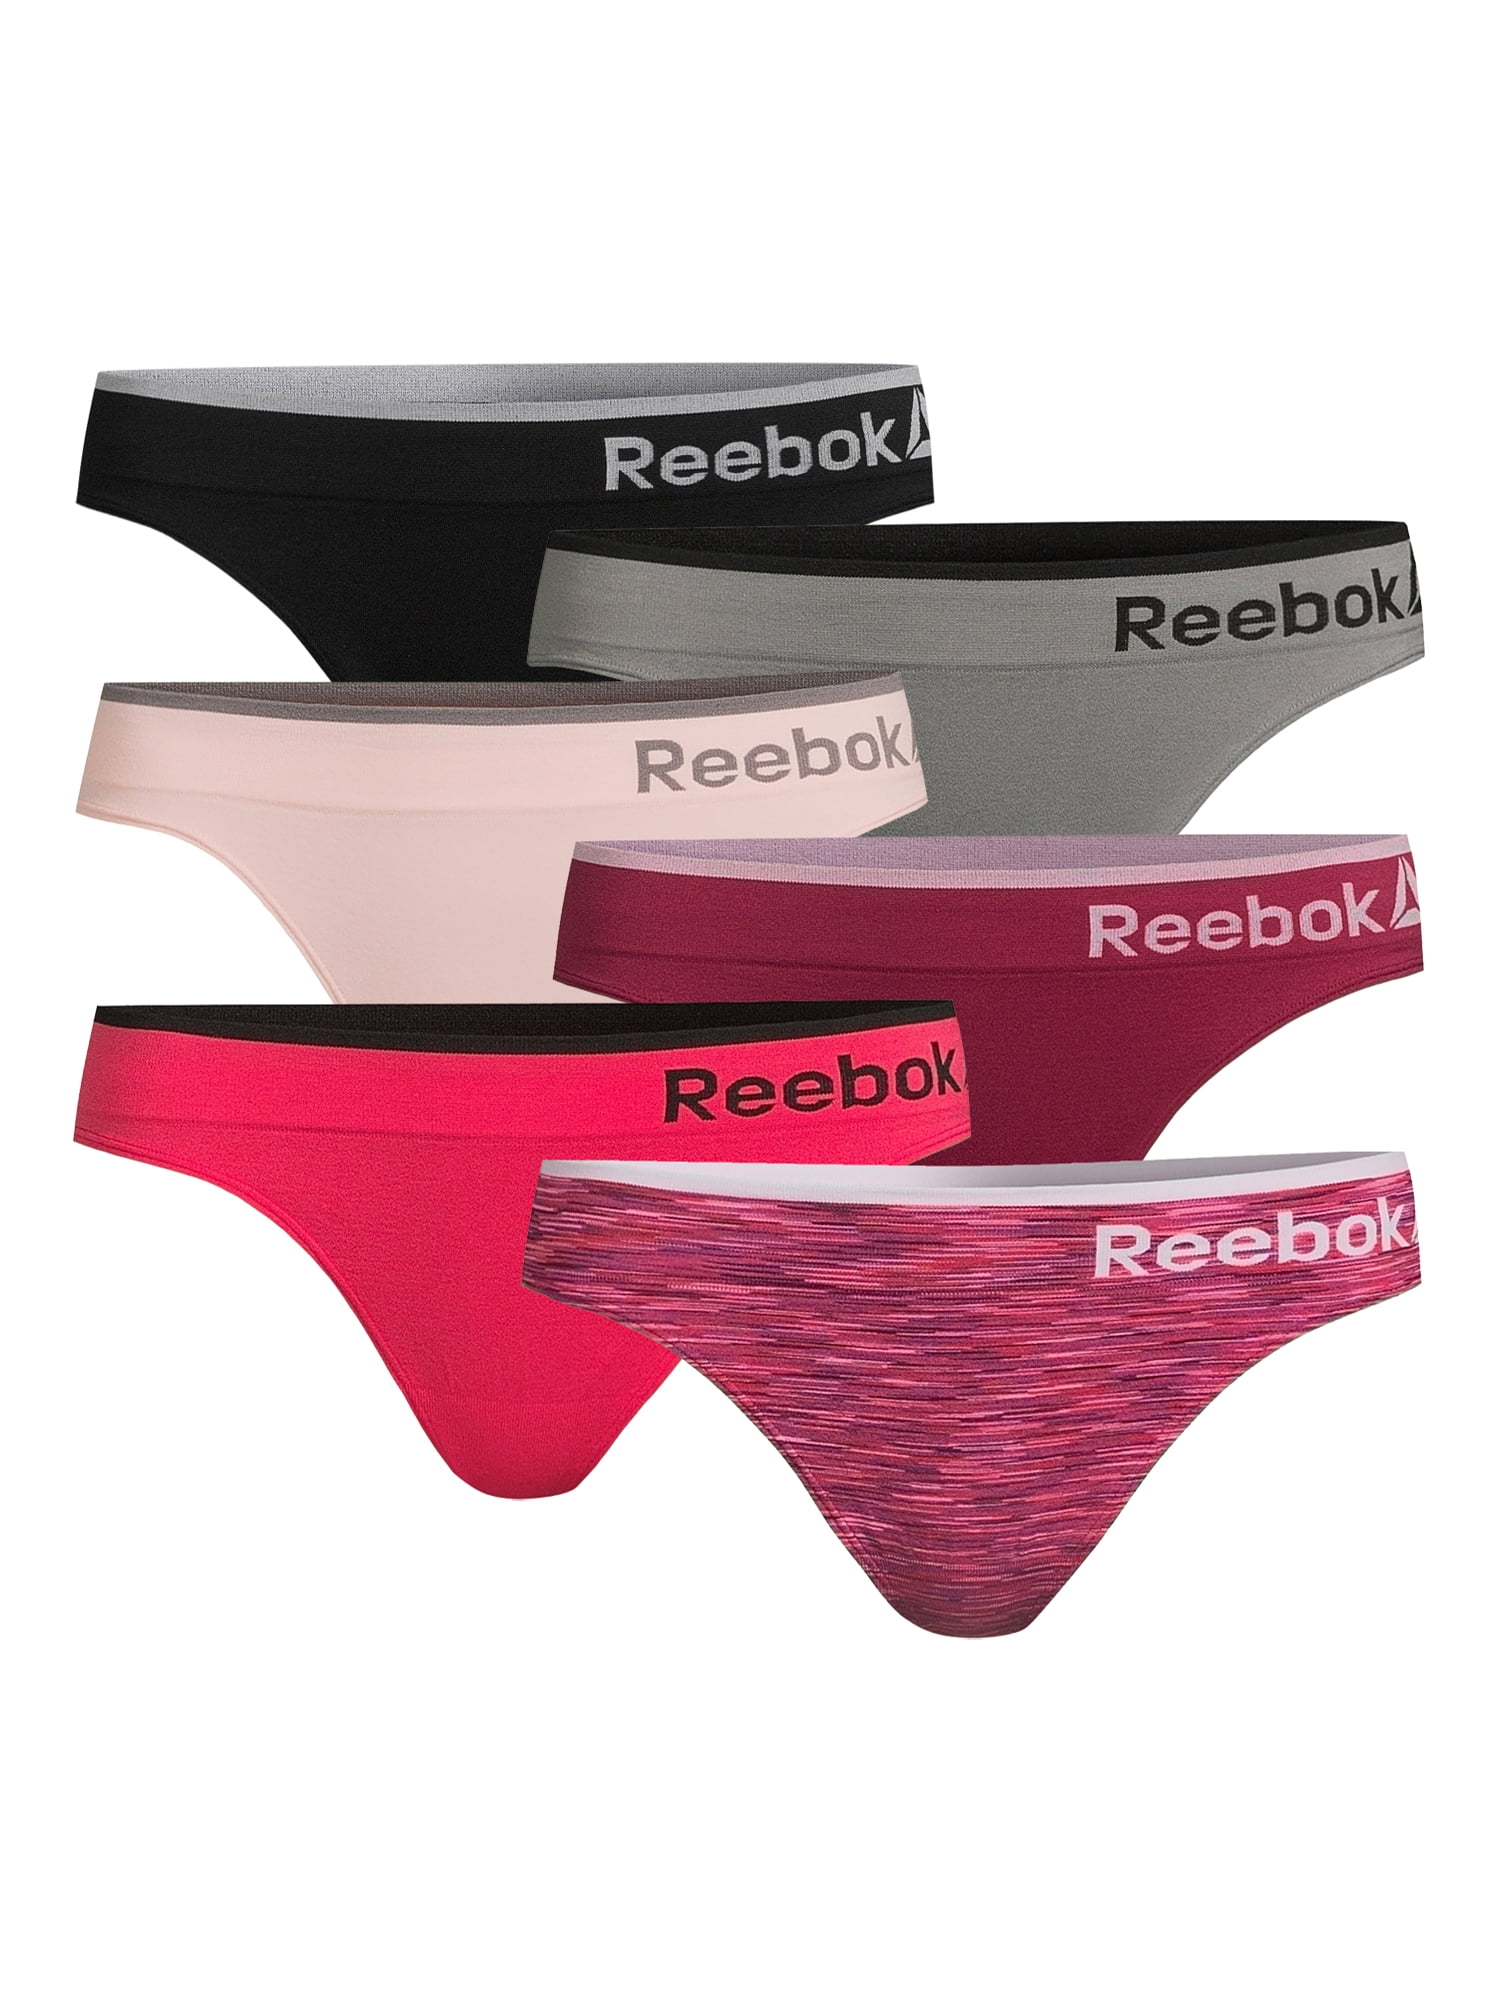 Reebok Women's Seamless Thong, 6-Pack, Sizes XS-3XL - Walmart.com